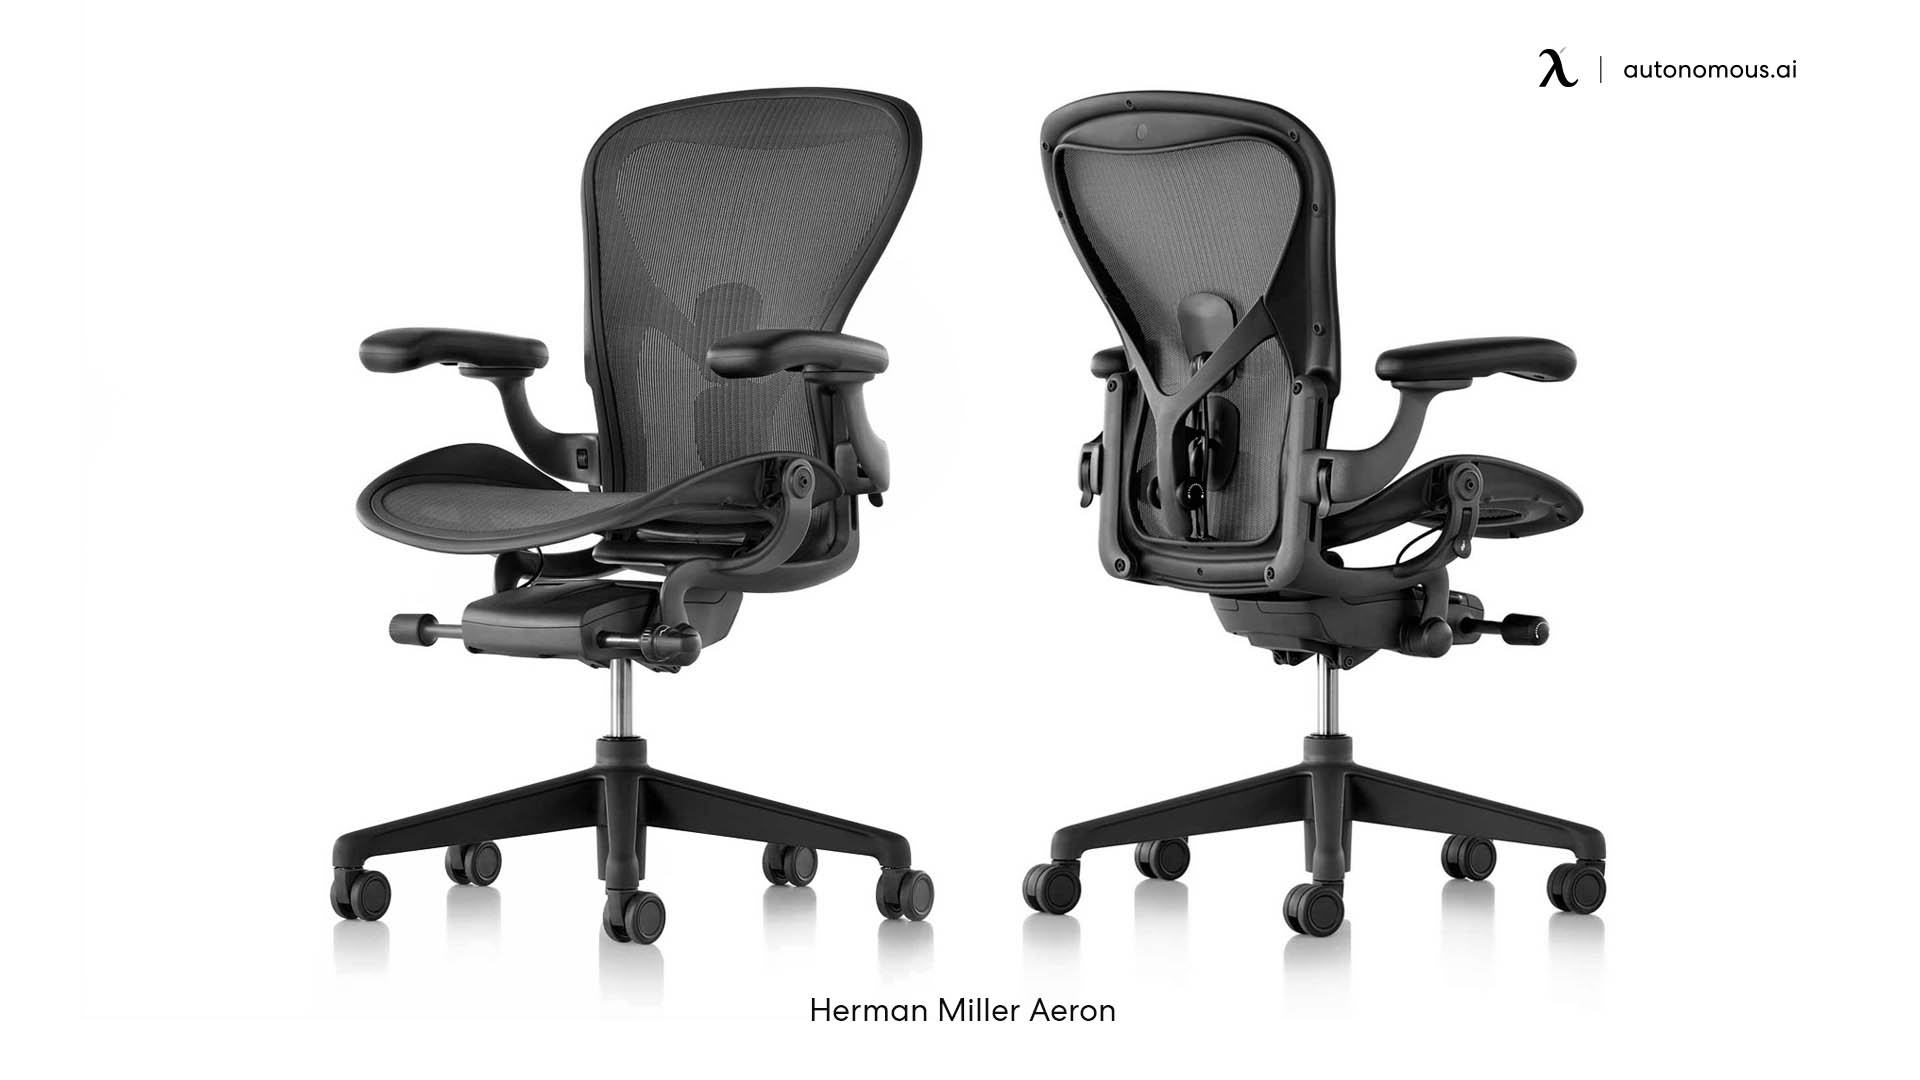 Herman Miller Aeron low profile desk chair